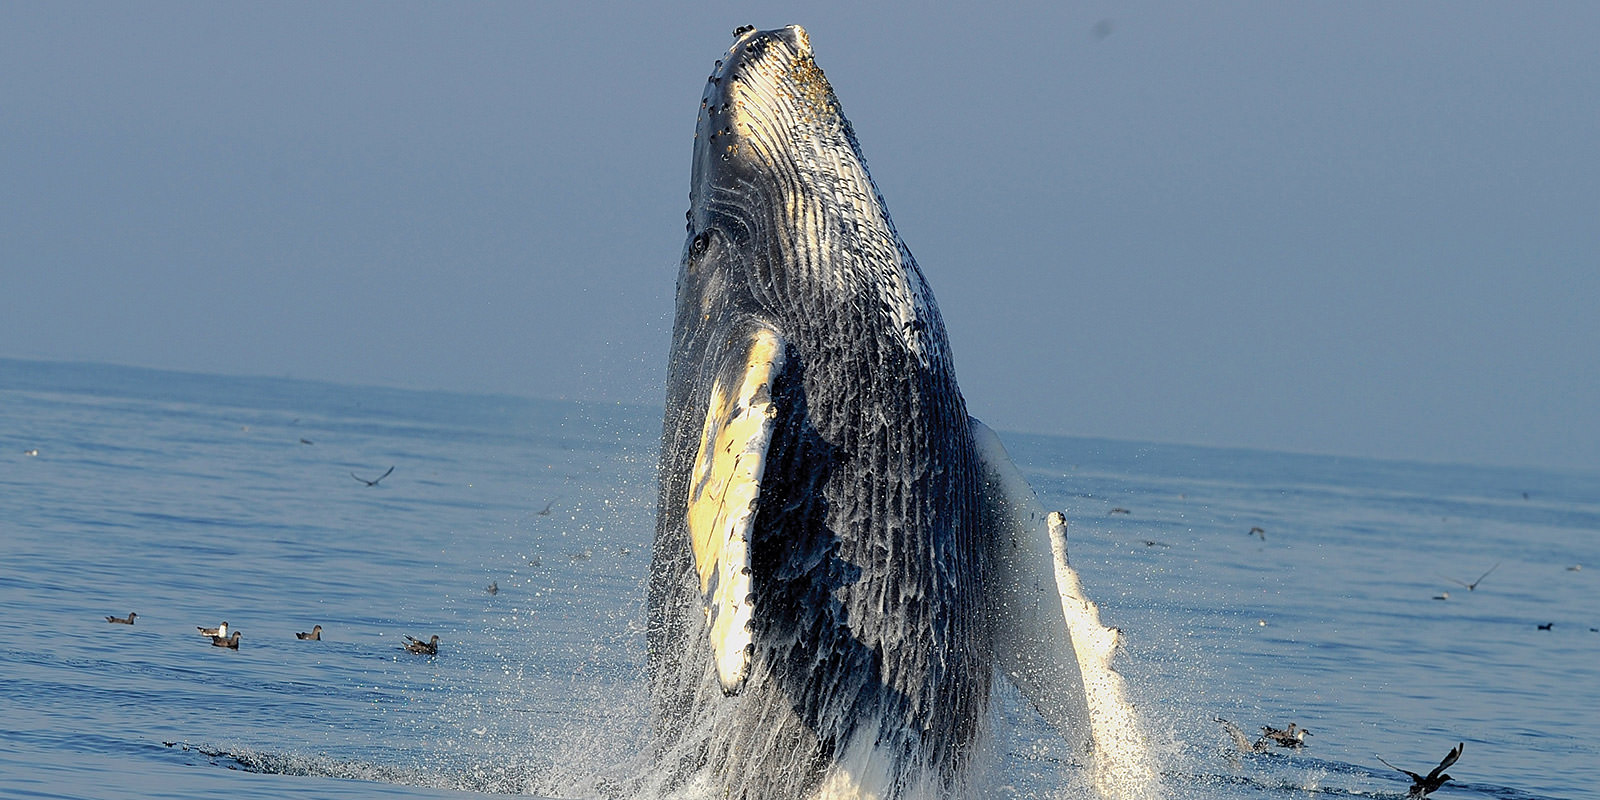 photo of humpback whale breaching